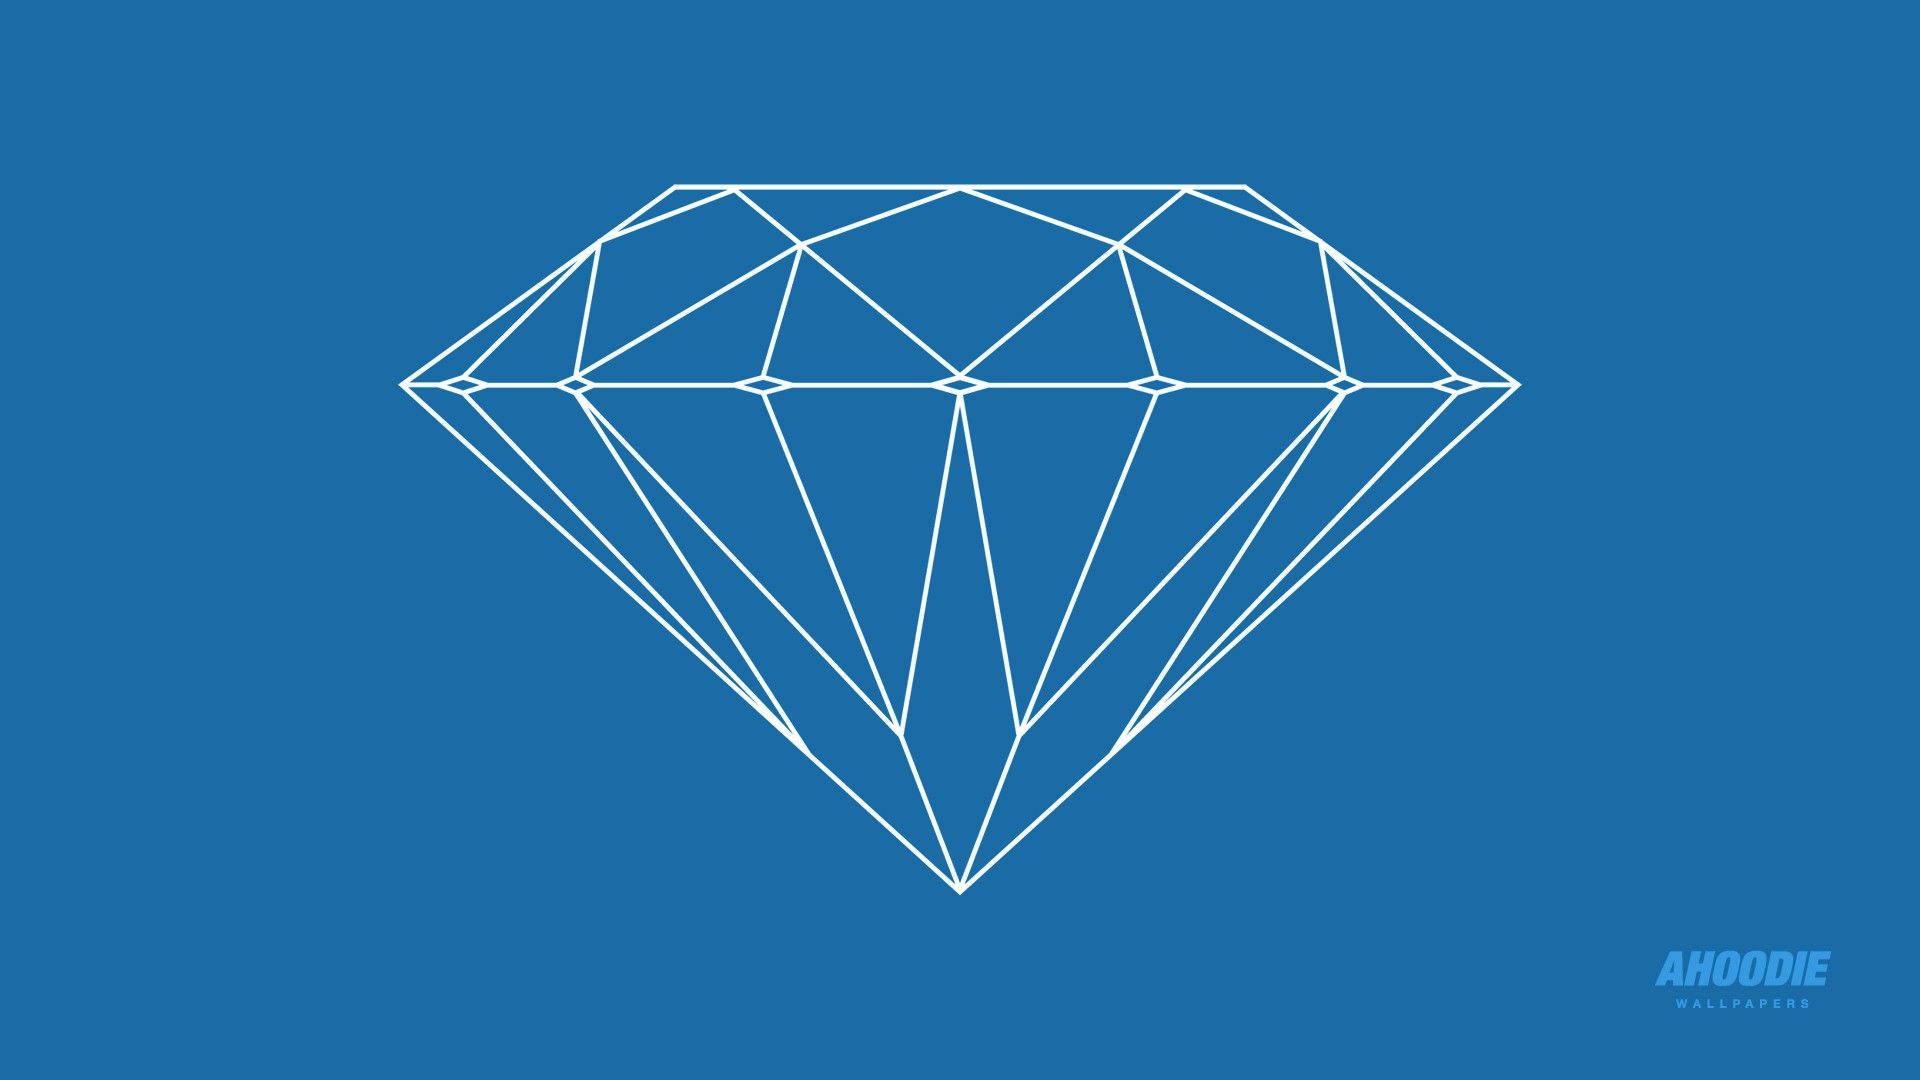 diamond supply co wallpaper blue